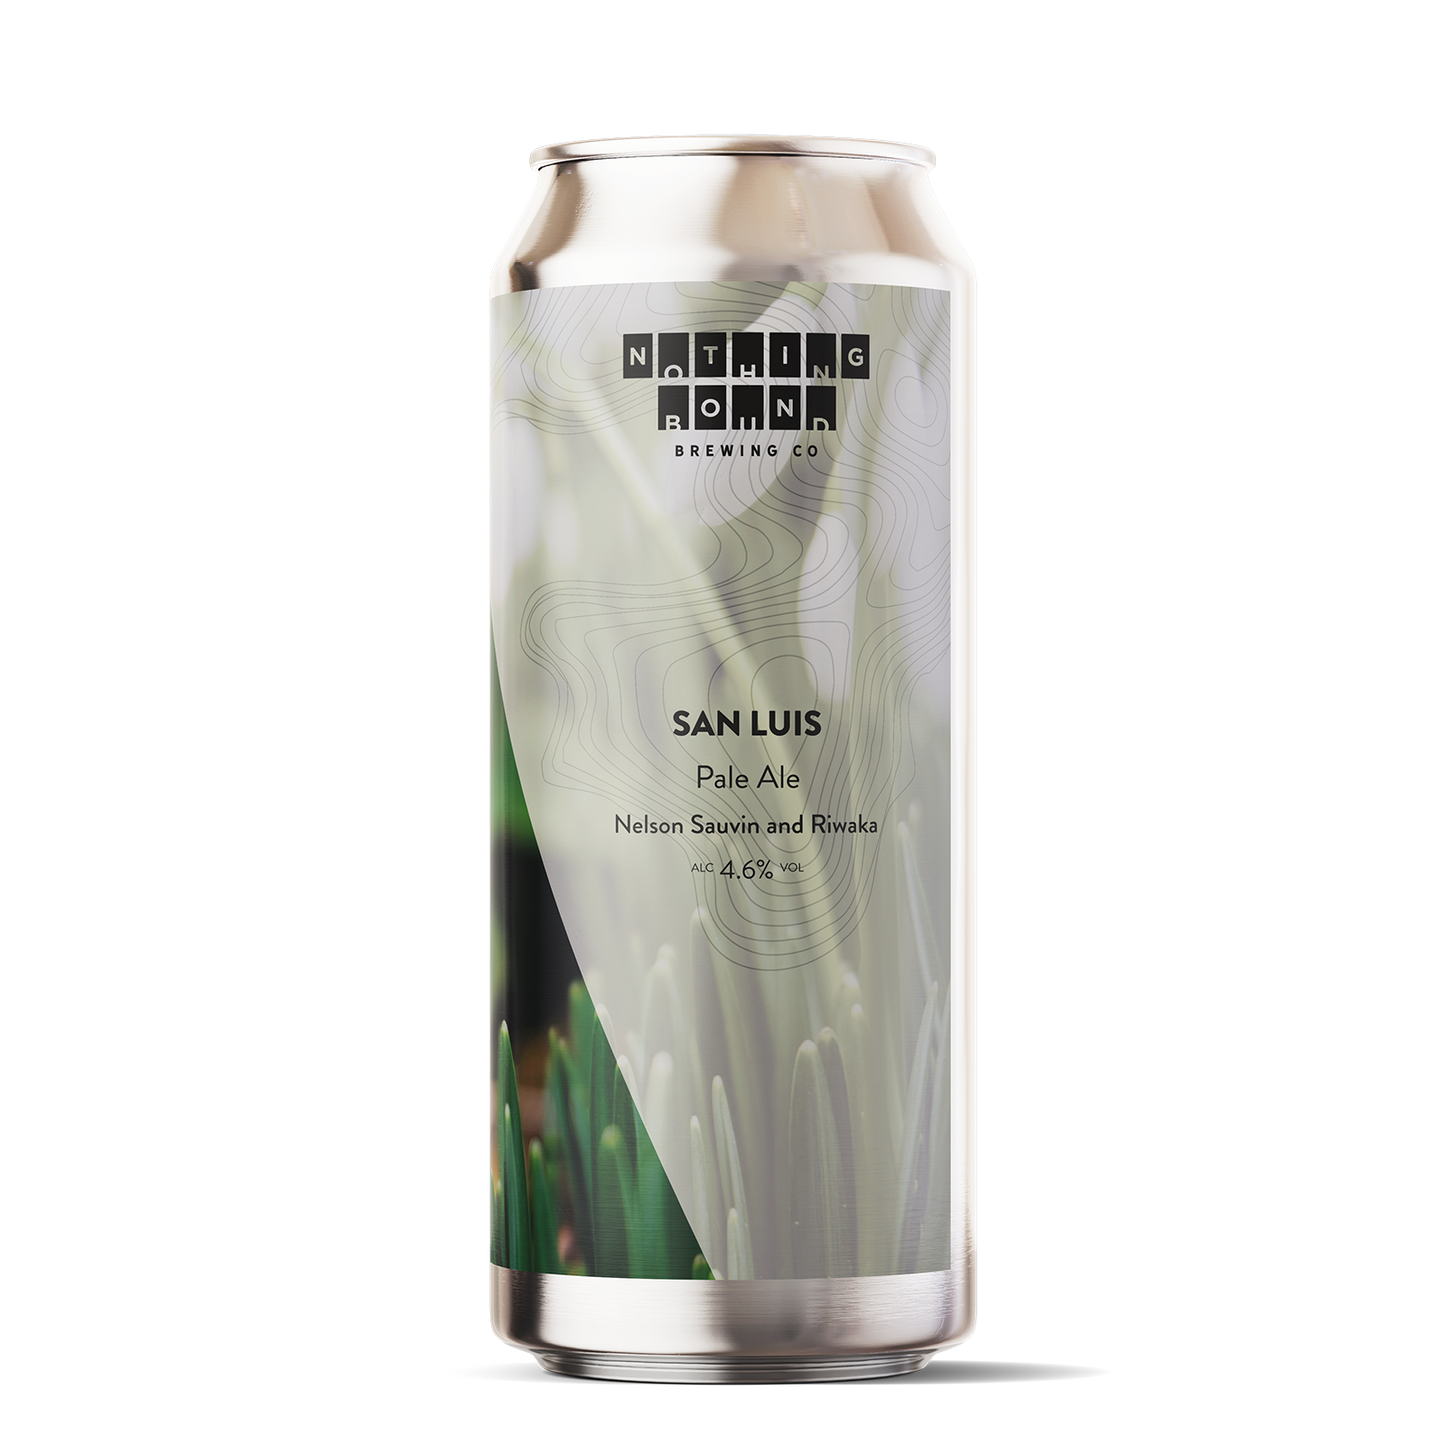 San Luis Pale Ale / 4.6% / 6 PACK